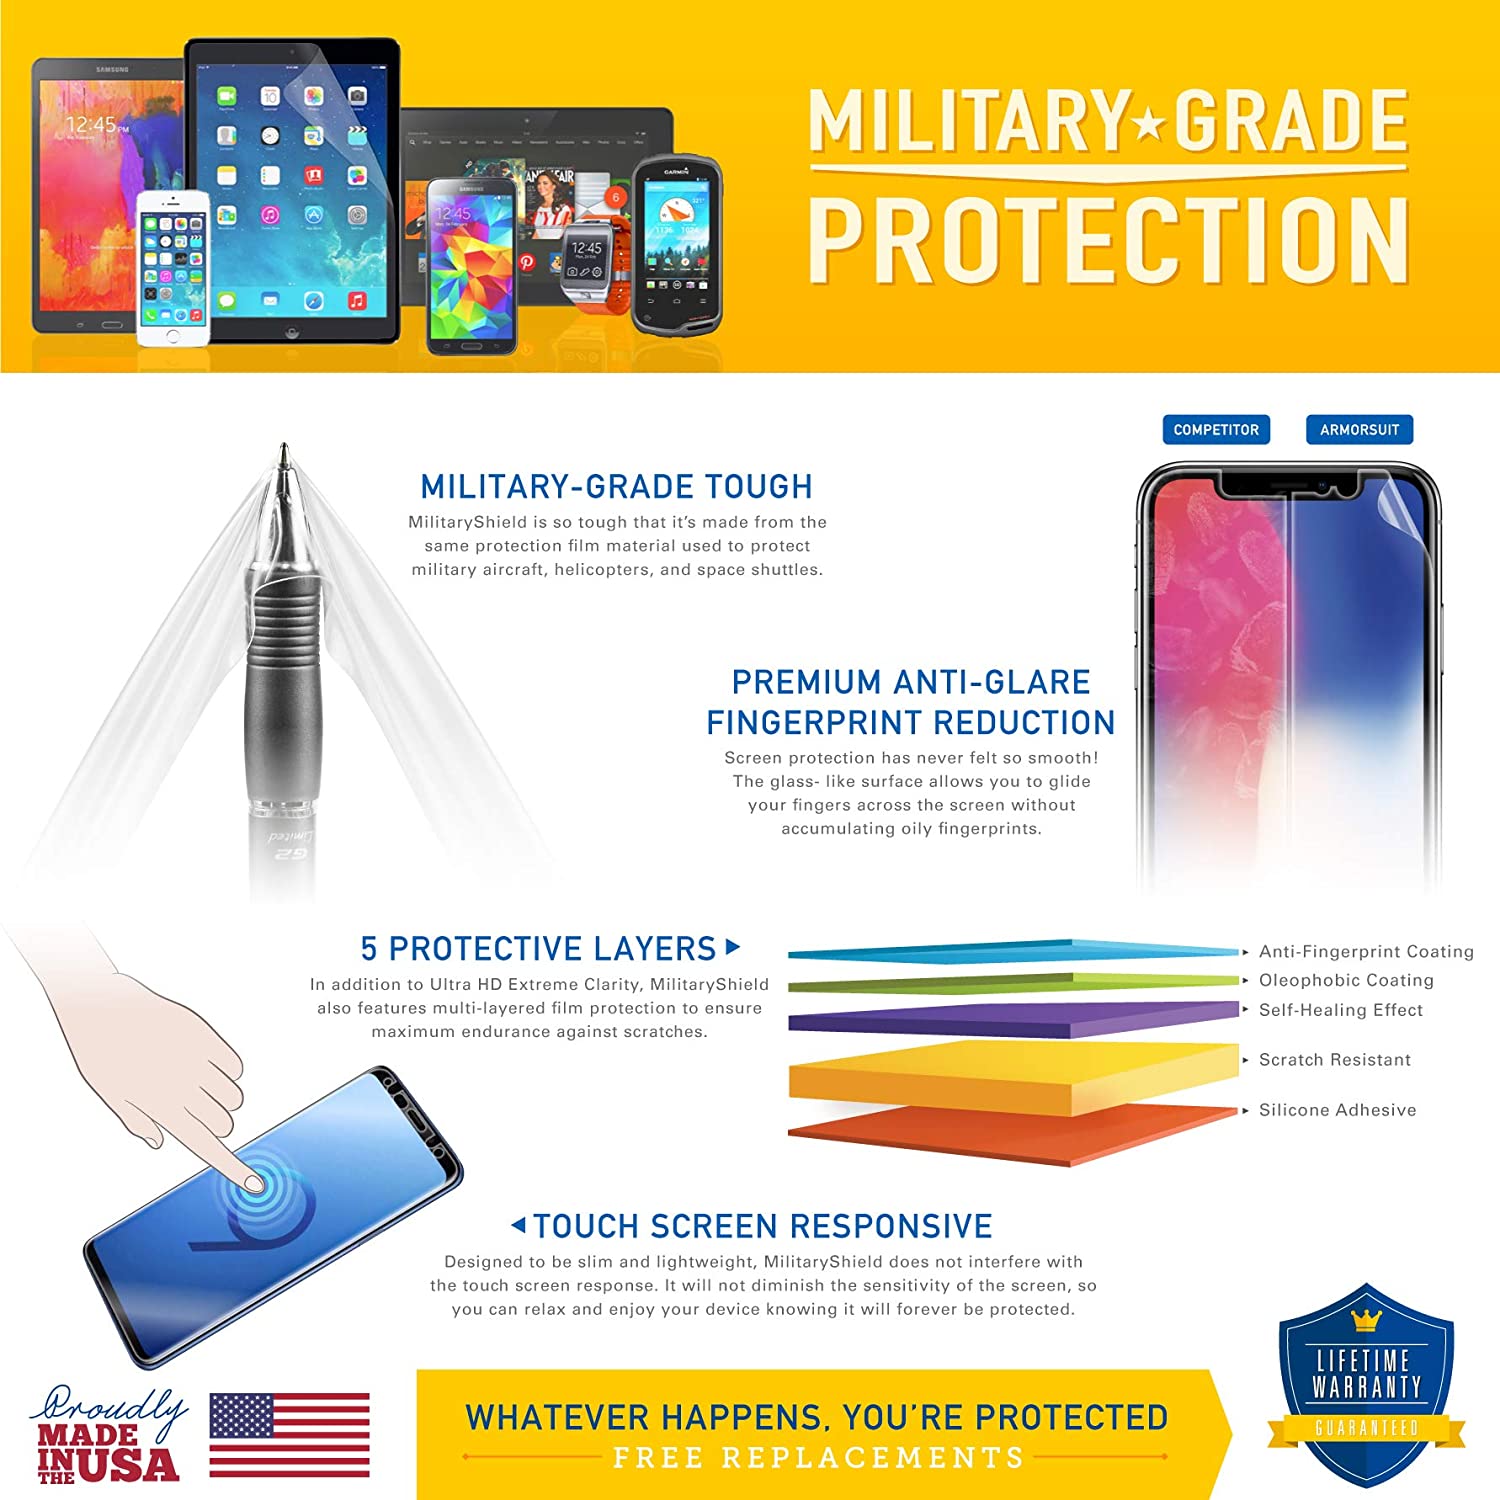 Samsung Galaxy TabPRO 10.1" Screen Protector